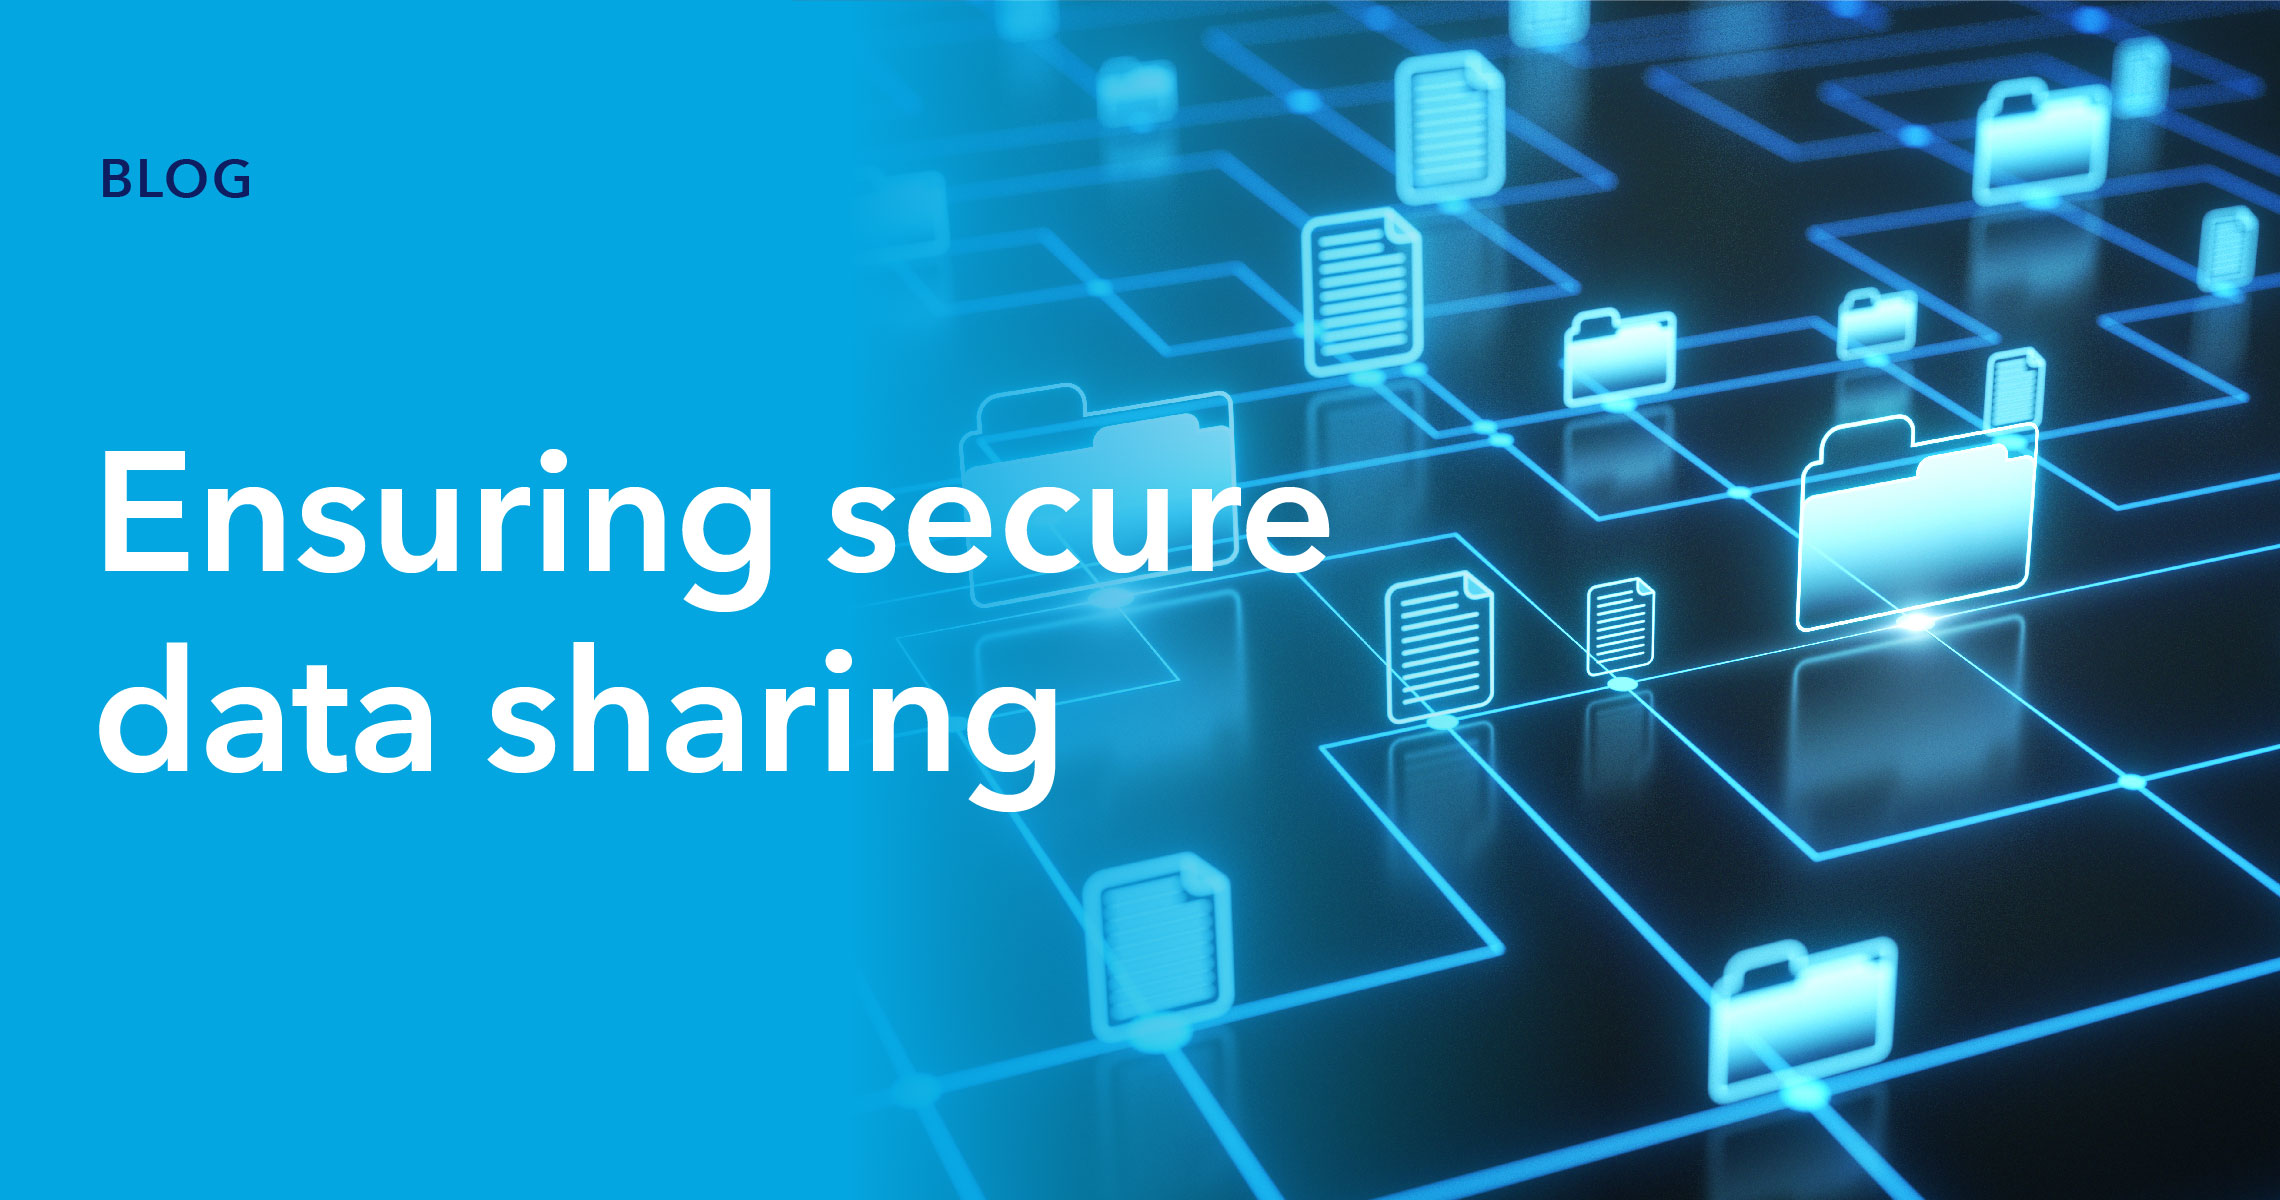 Blog Header image - ensuring secure data sharing